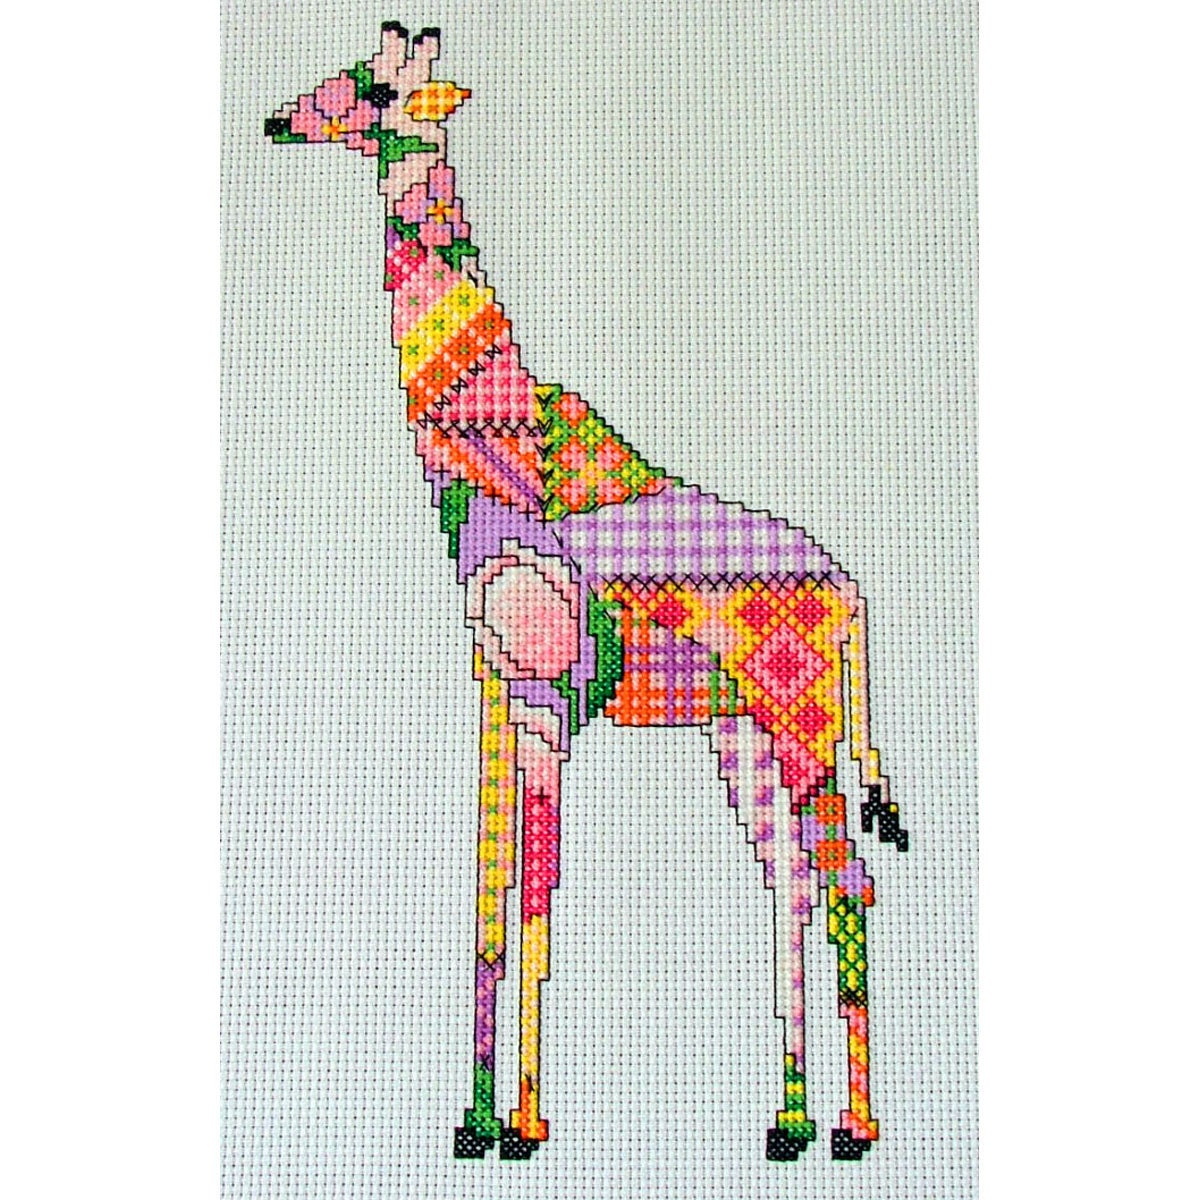 patchwork-giraffe-cross-stitch-pattern-instant-download-pdf-chart-from-chartsandstuff-on-etsy